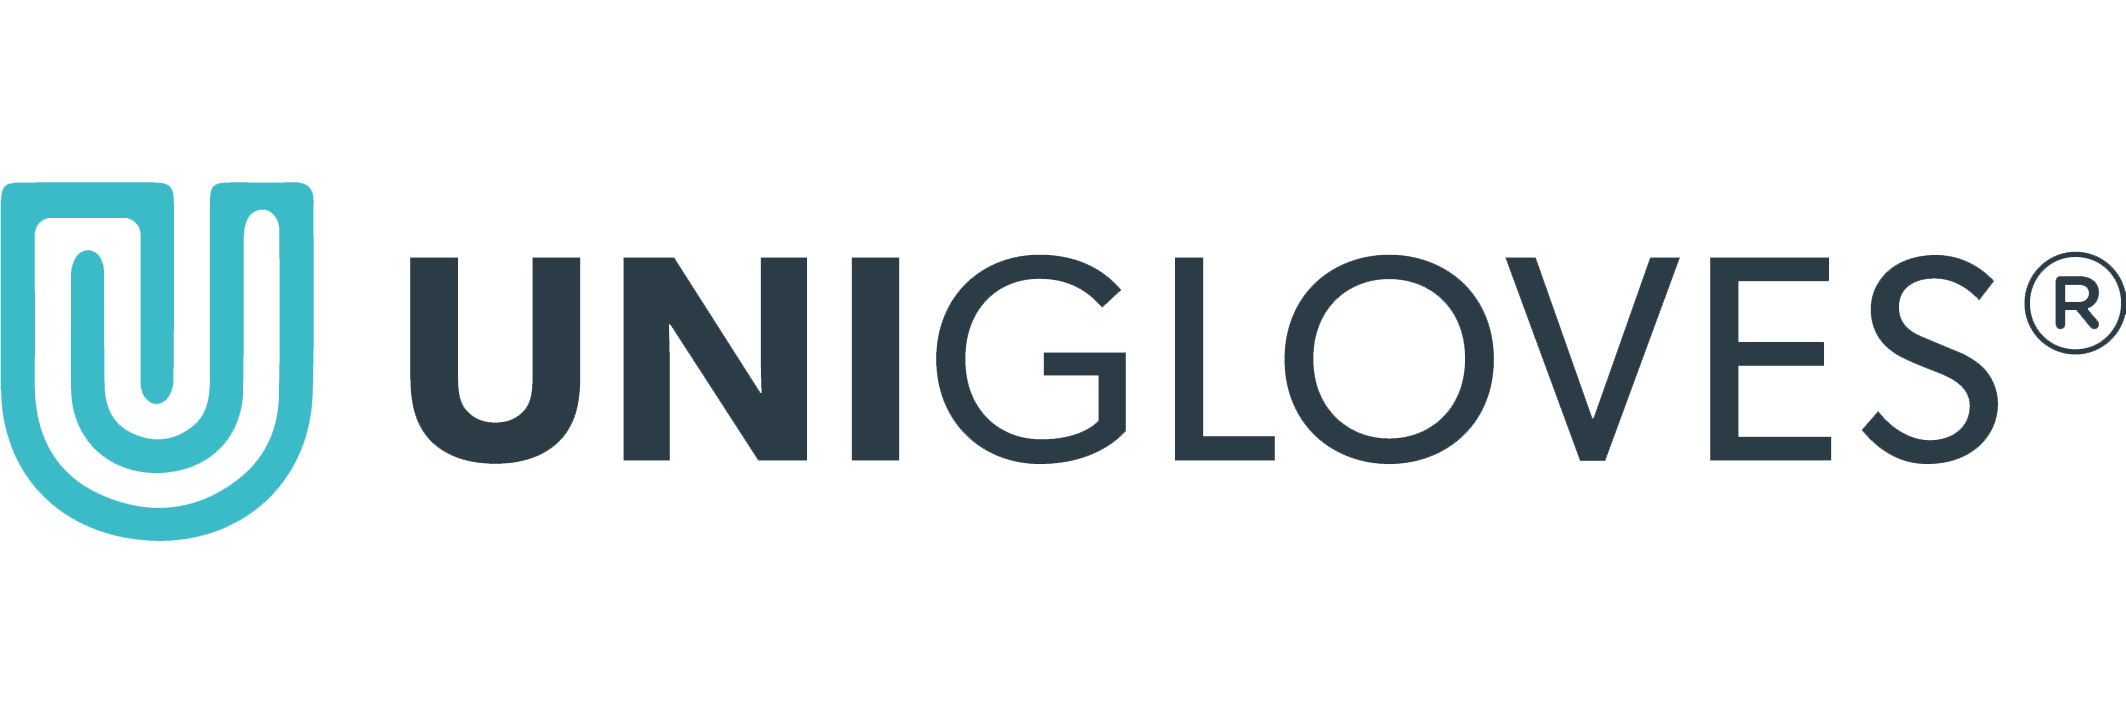 Unigloves handschuh - Der absolute Testsieger unserer Produkttester